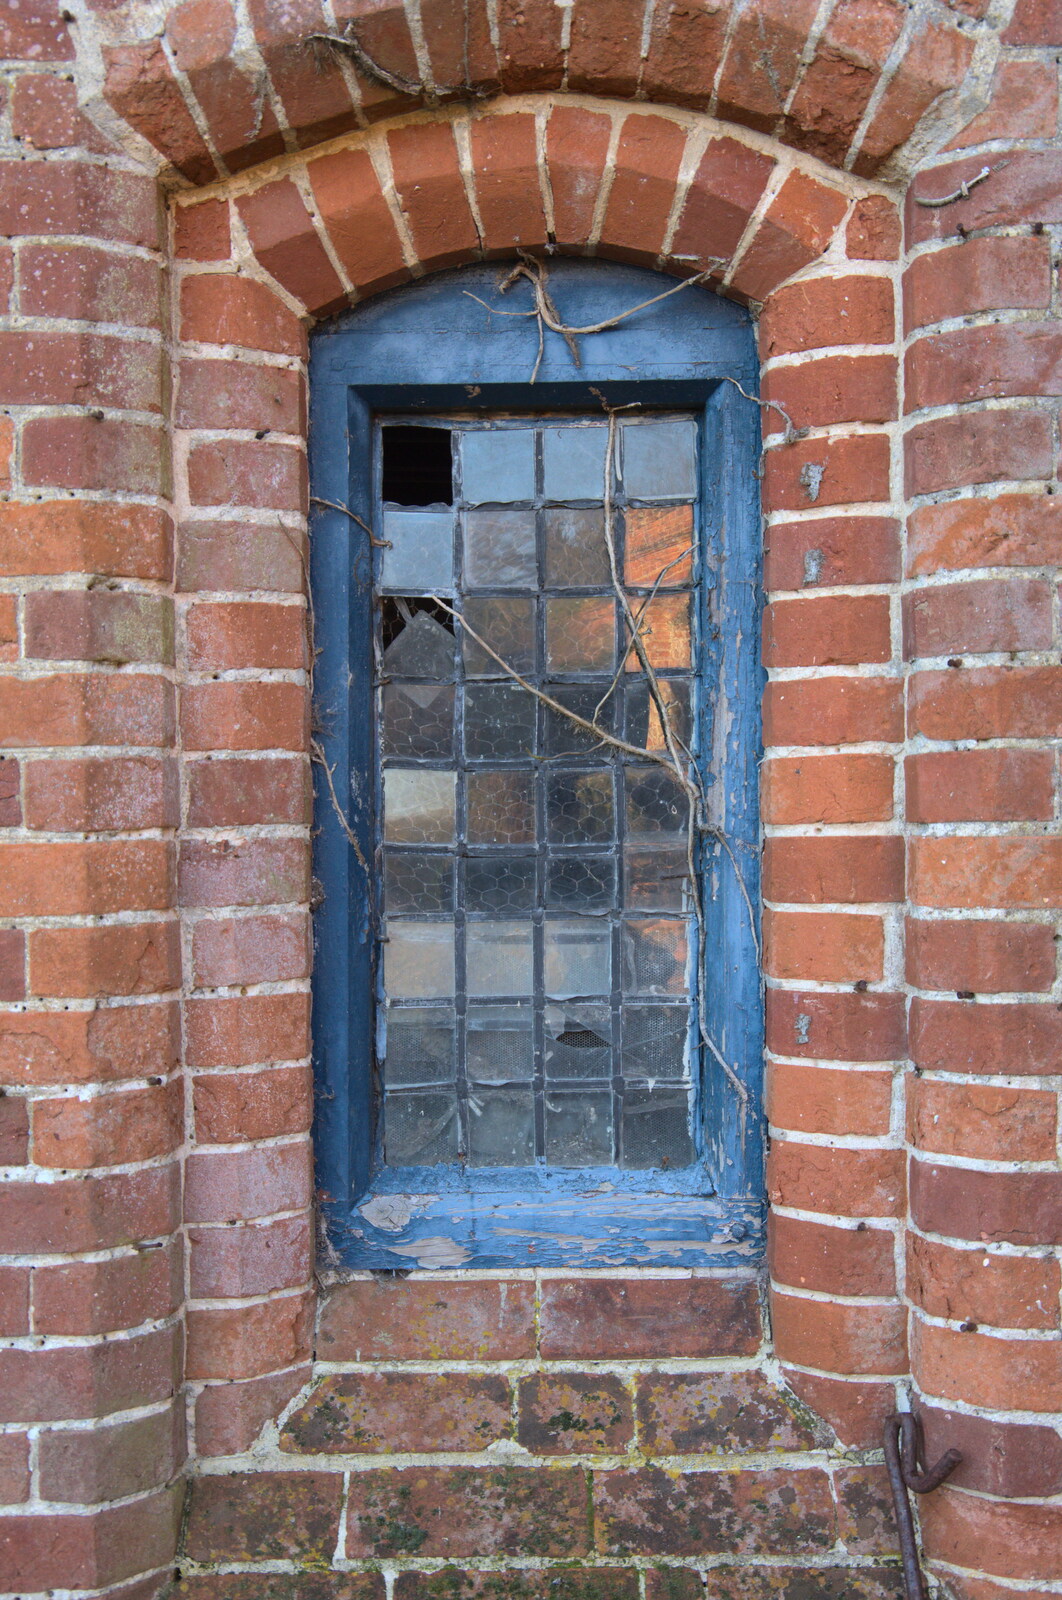 A distressed window from Snowdrops at Talconeston Hall, Tacolneston, Norfolk - 7th February 2020